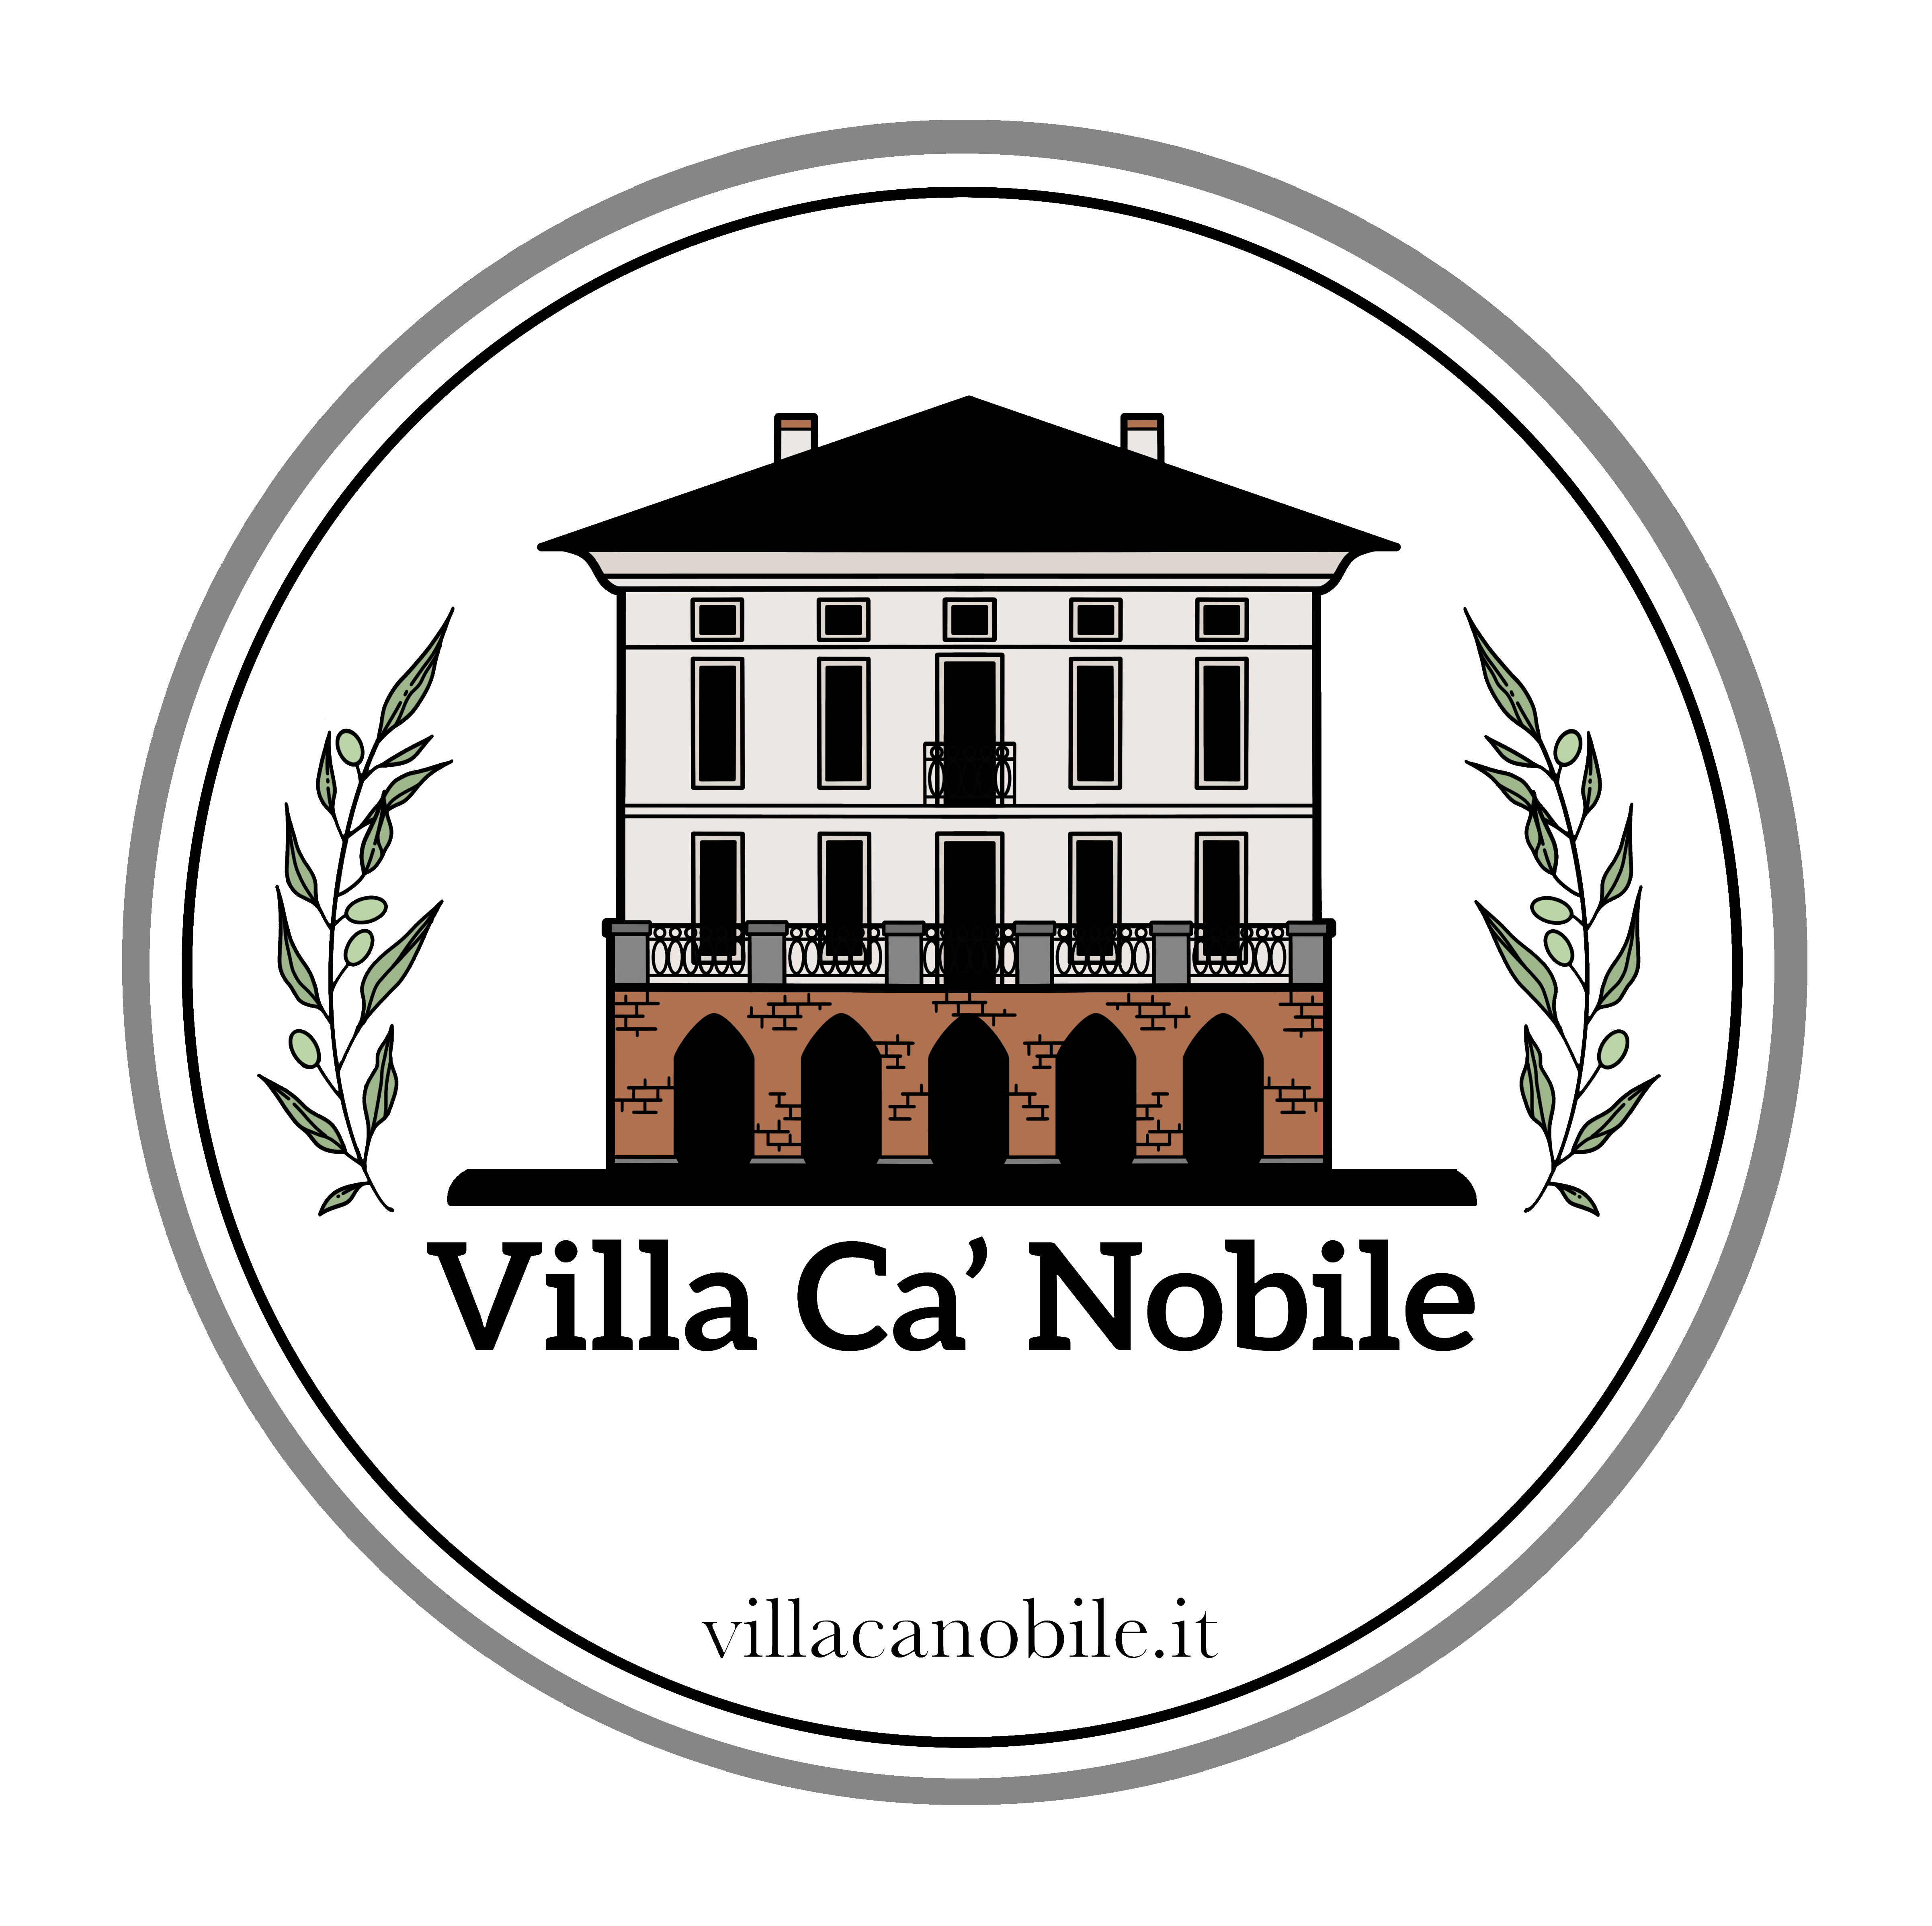 Villa Ca' Nobile